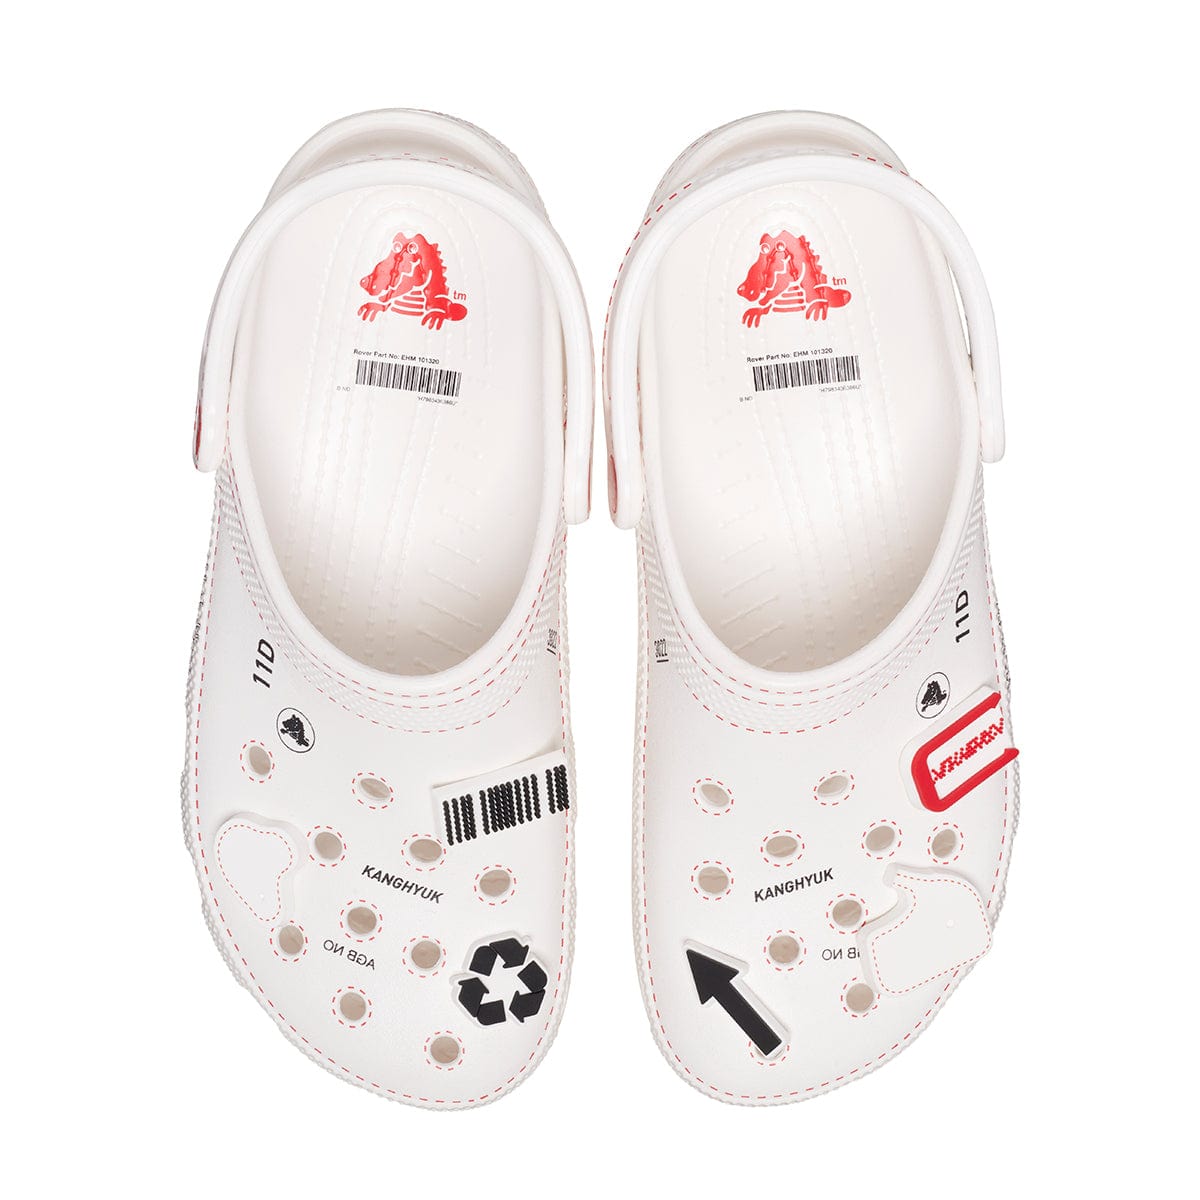 Crocs Sandals X KANGHYUK CLASSIC CLOG